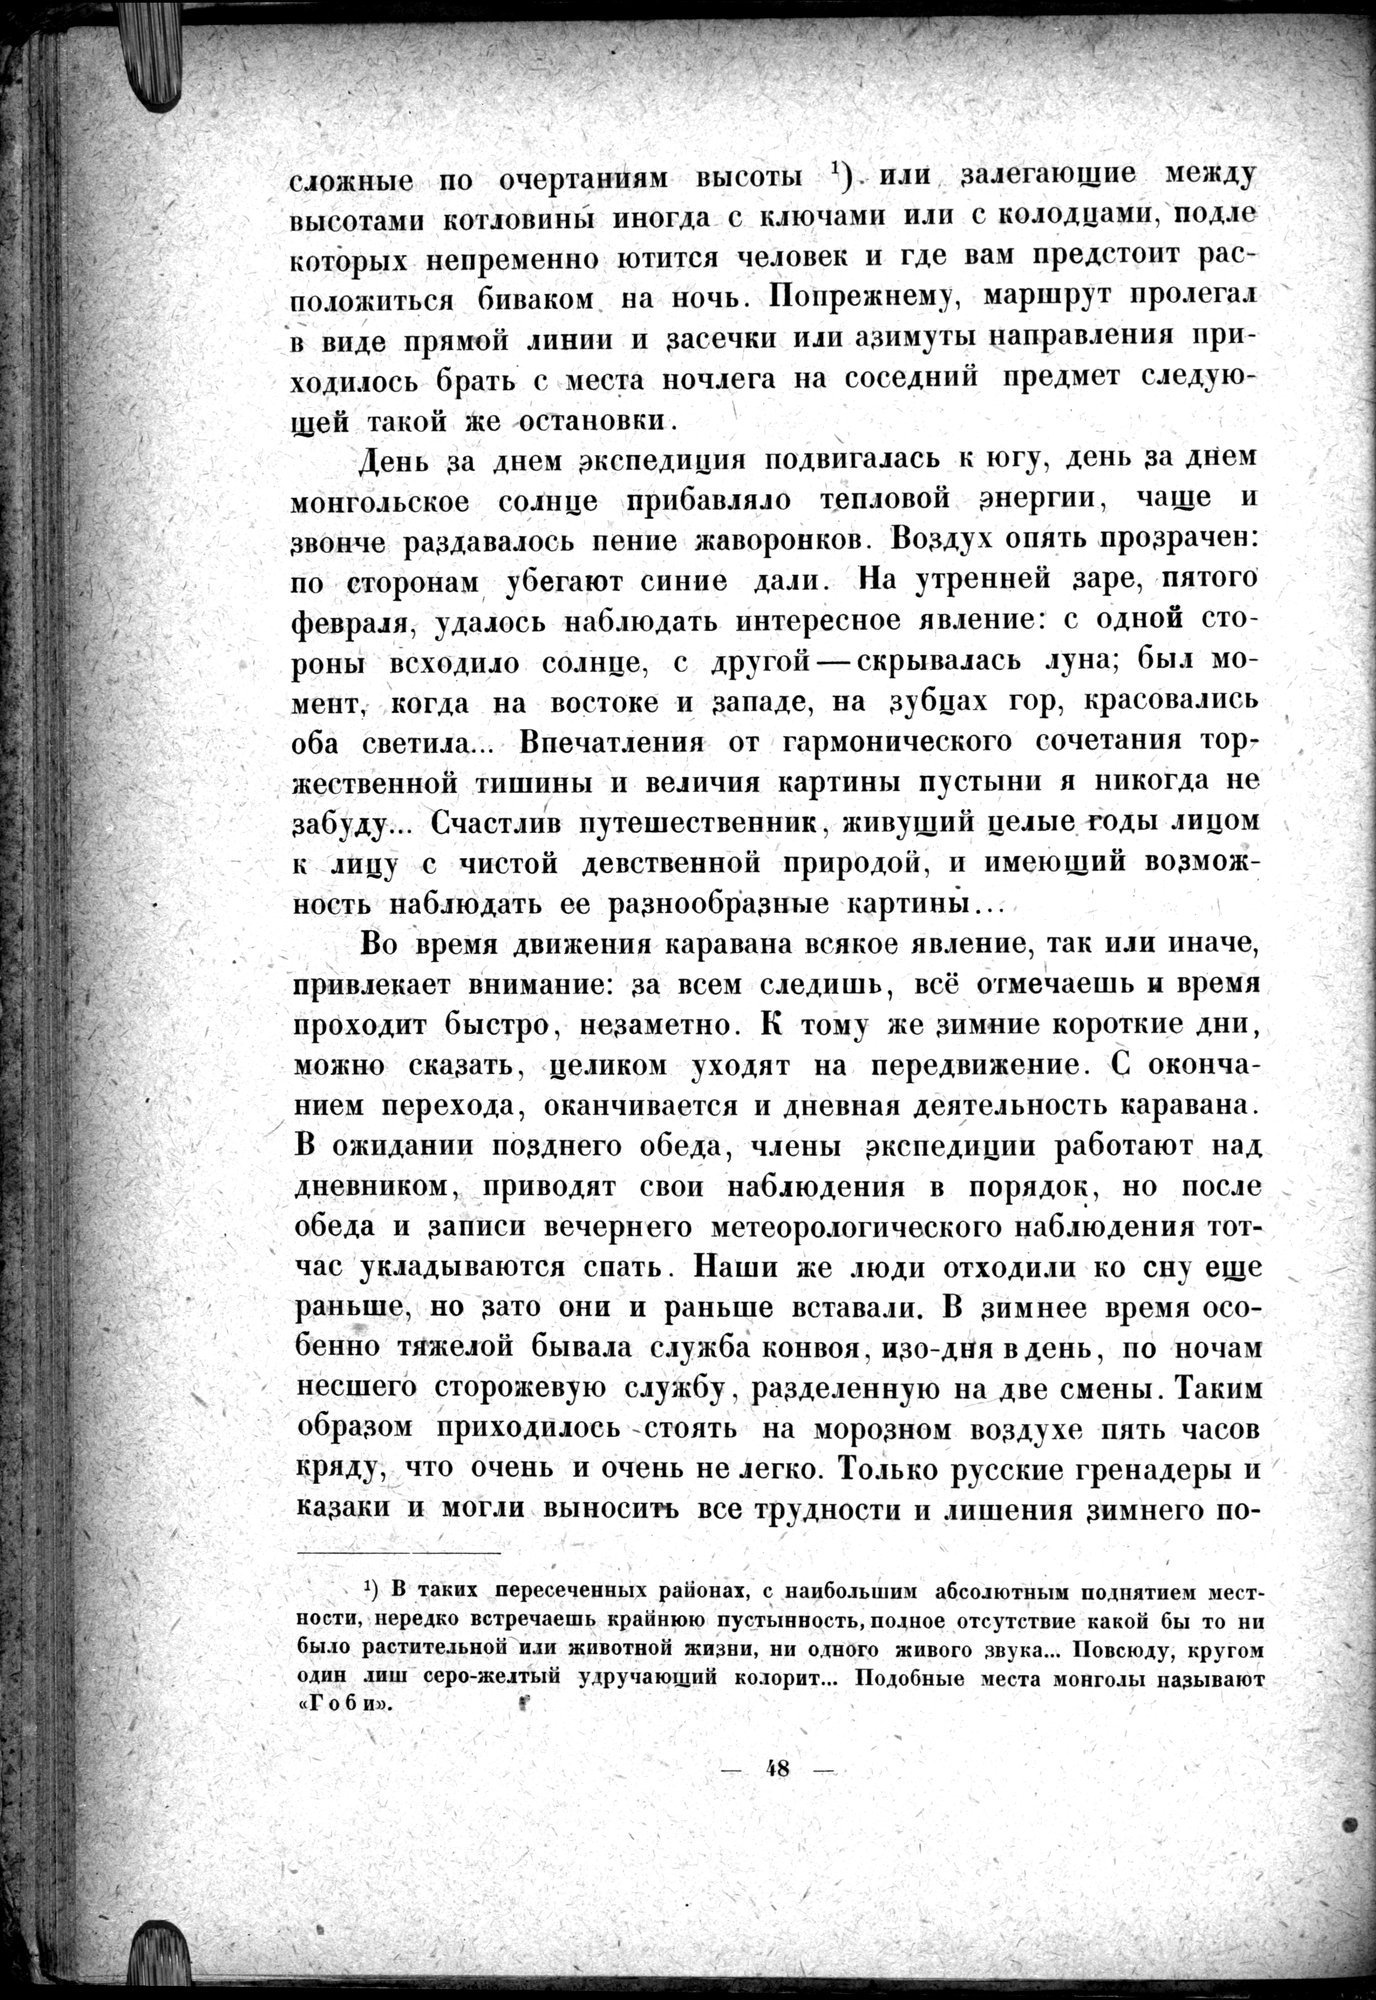 Mongoliya i Amdo i mertby gorod Khara-Khoto : vol.1 / Page 72 (Grayscale High Resolution Image)